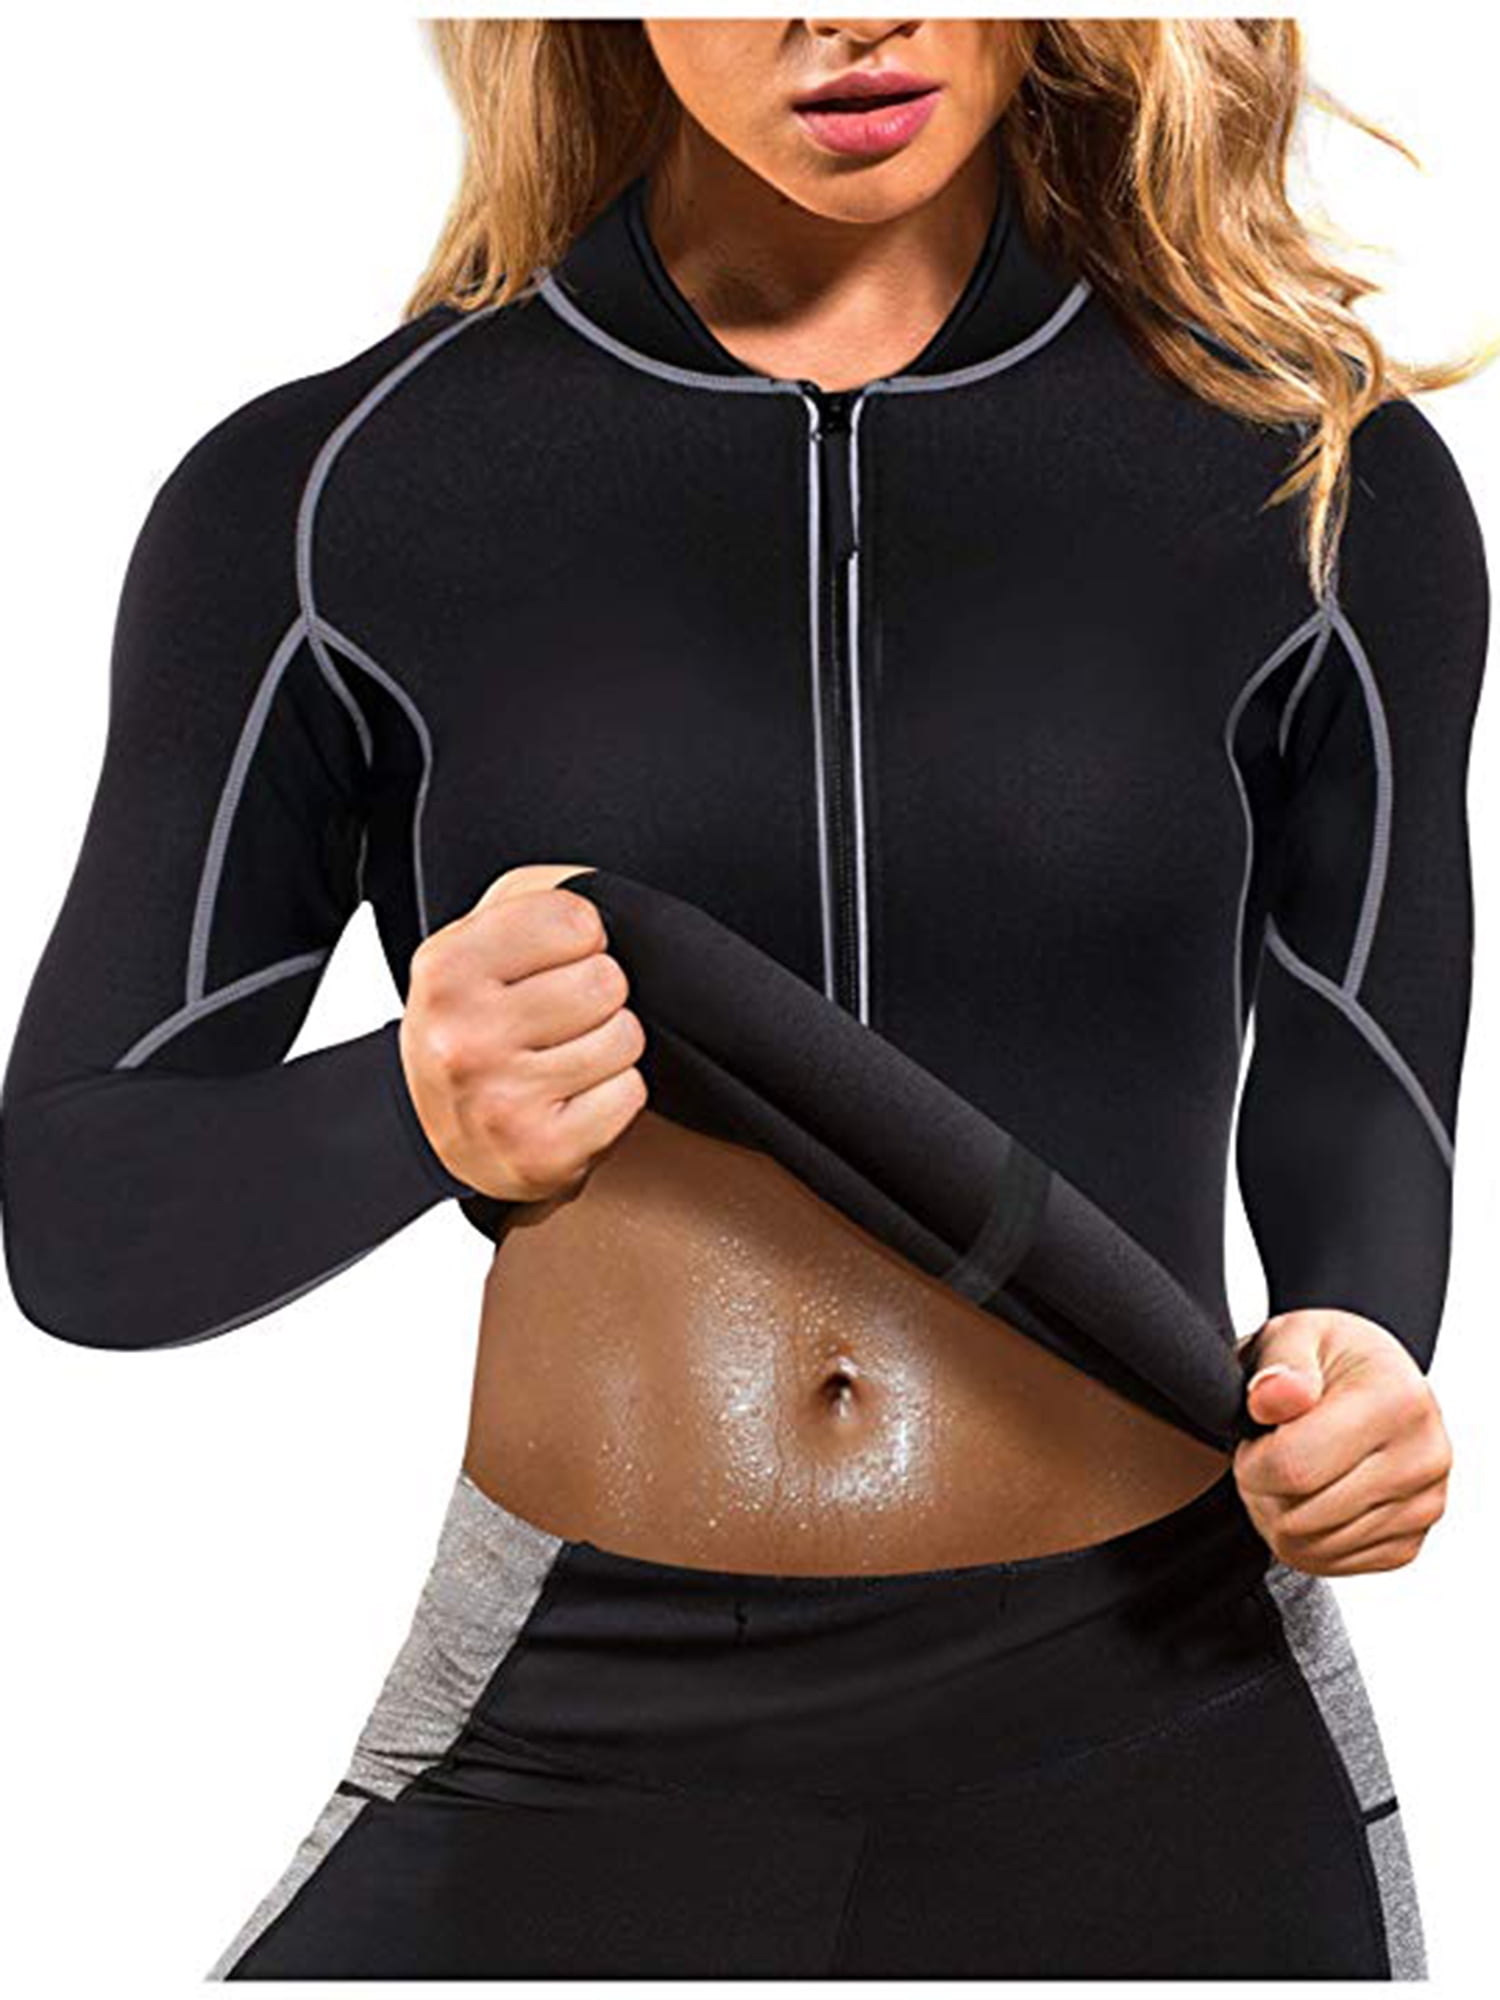 Men's Women Exercise Hot Thermal Sweating Long Sleeve Shirt Sauna Suit Neoprene 